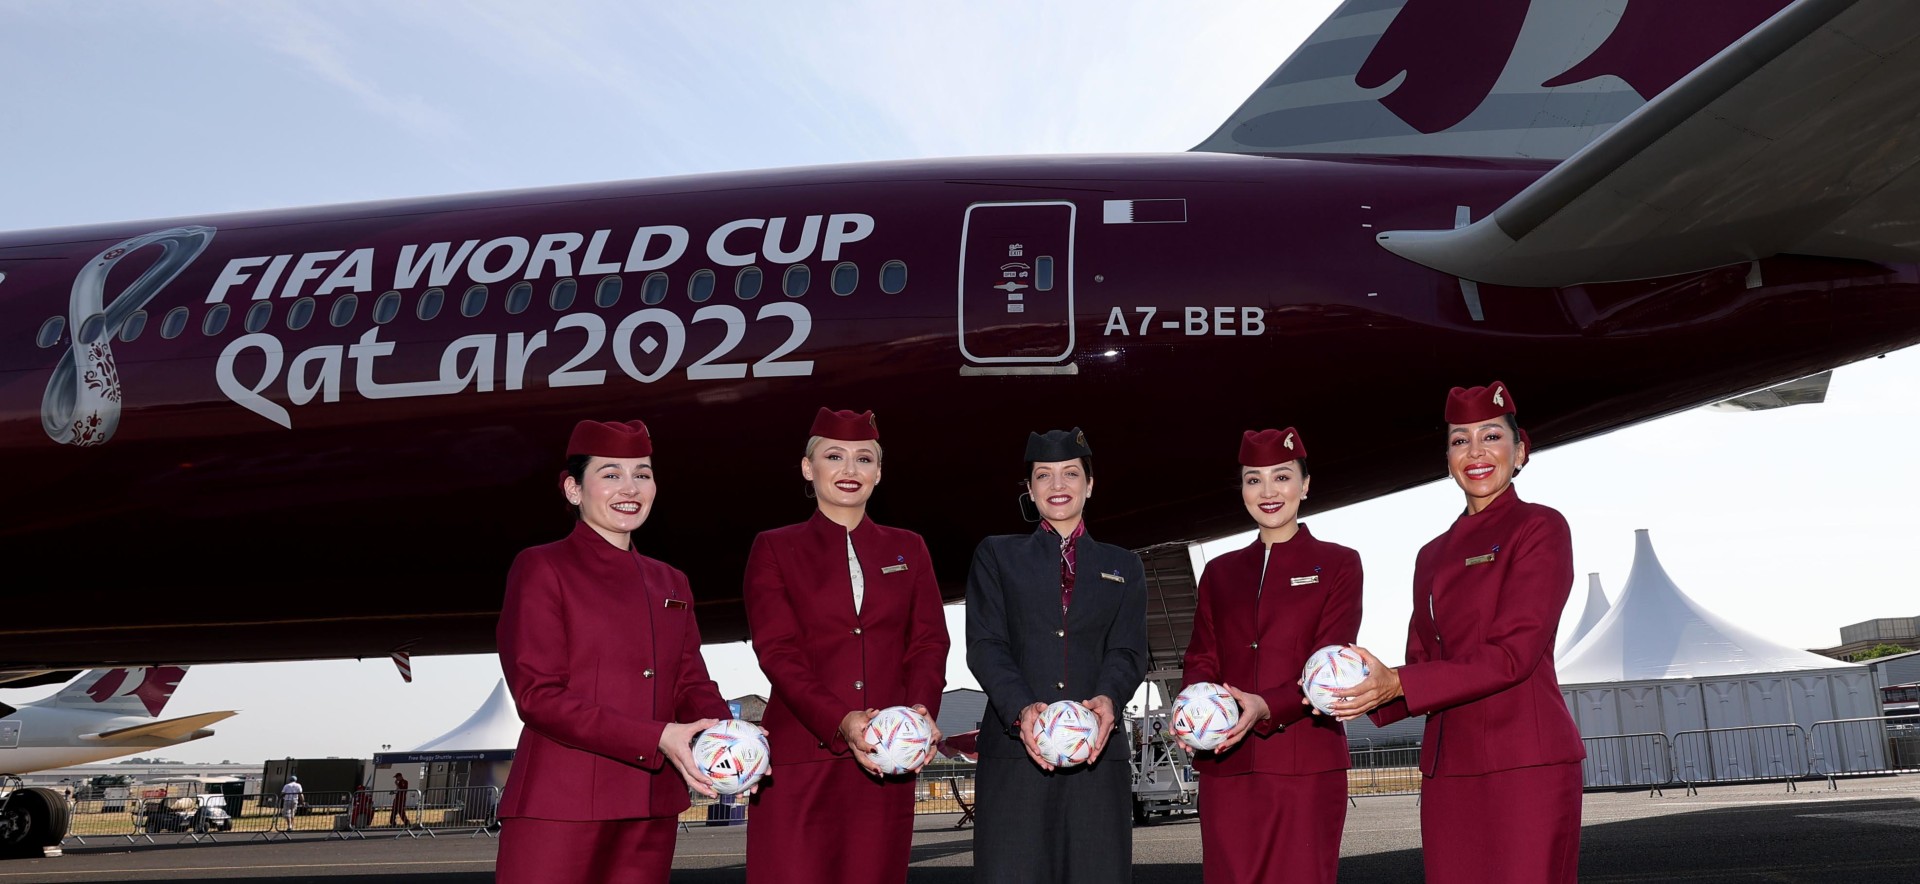 Qatar Airways FIFA World Cup 2022